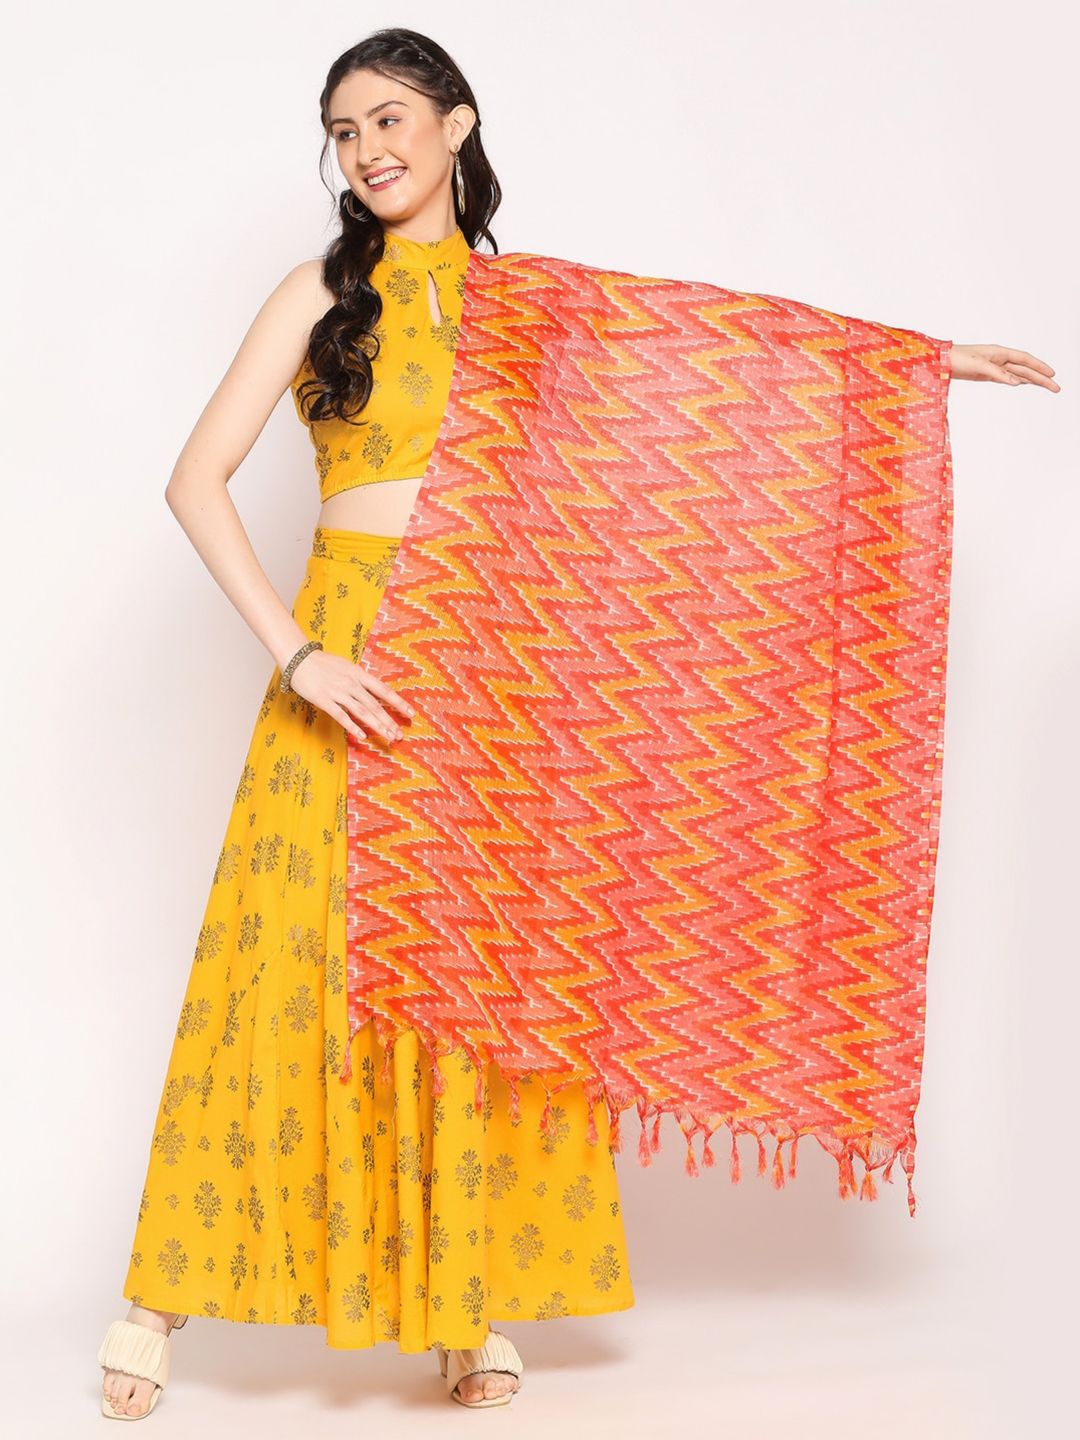 Dupatta Bazaar Peach-Coloured & Yellow Digital Printed Dupatta Price in India